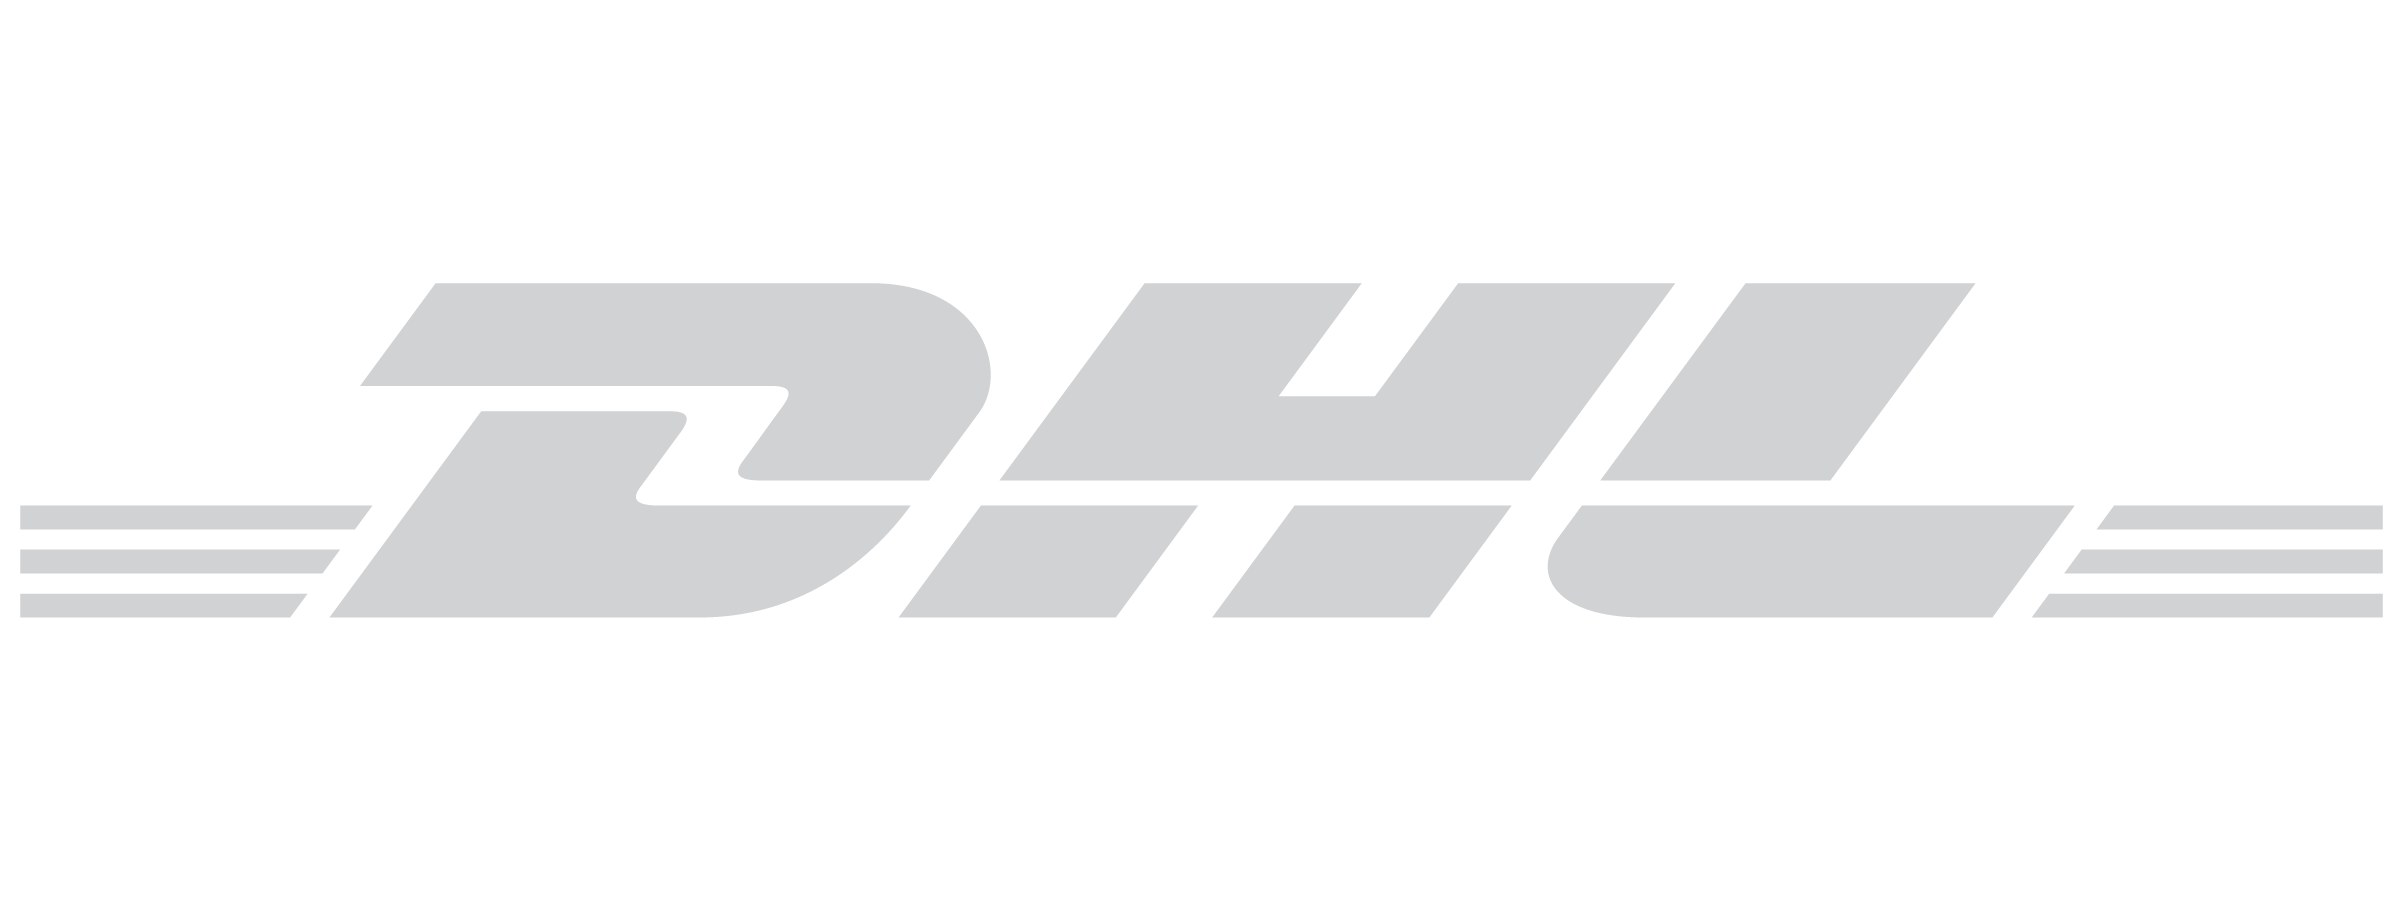 Shipping Logo One